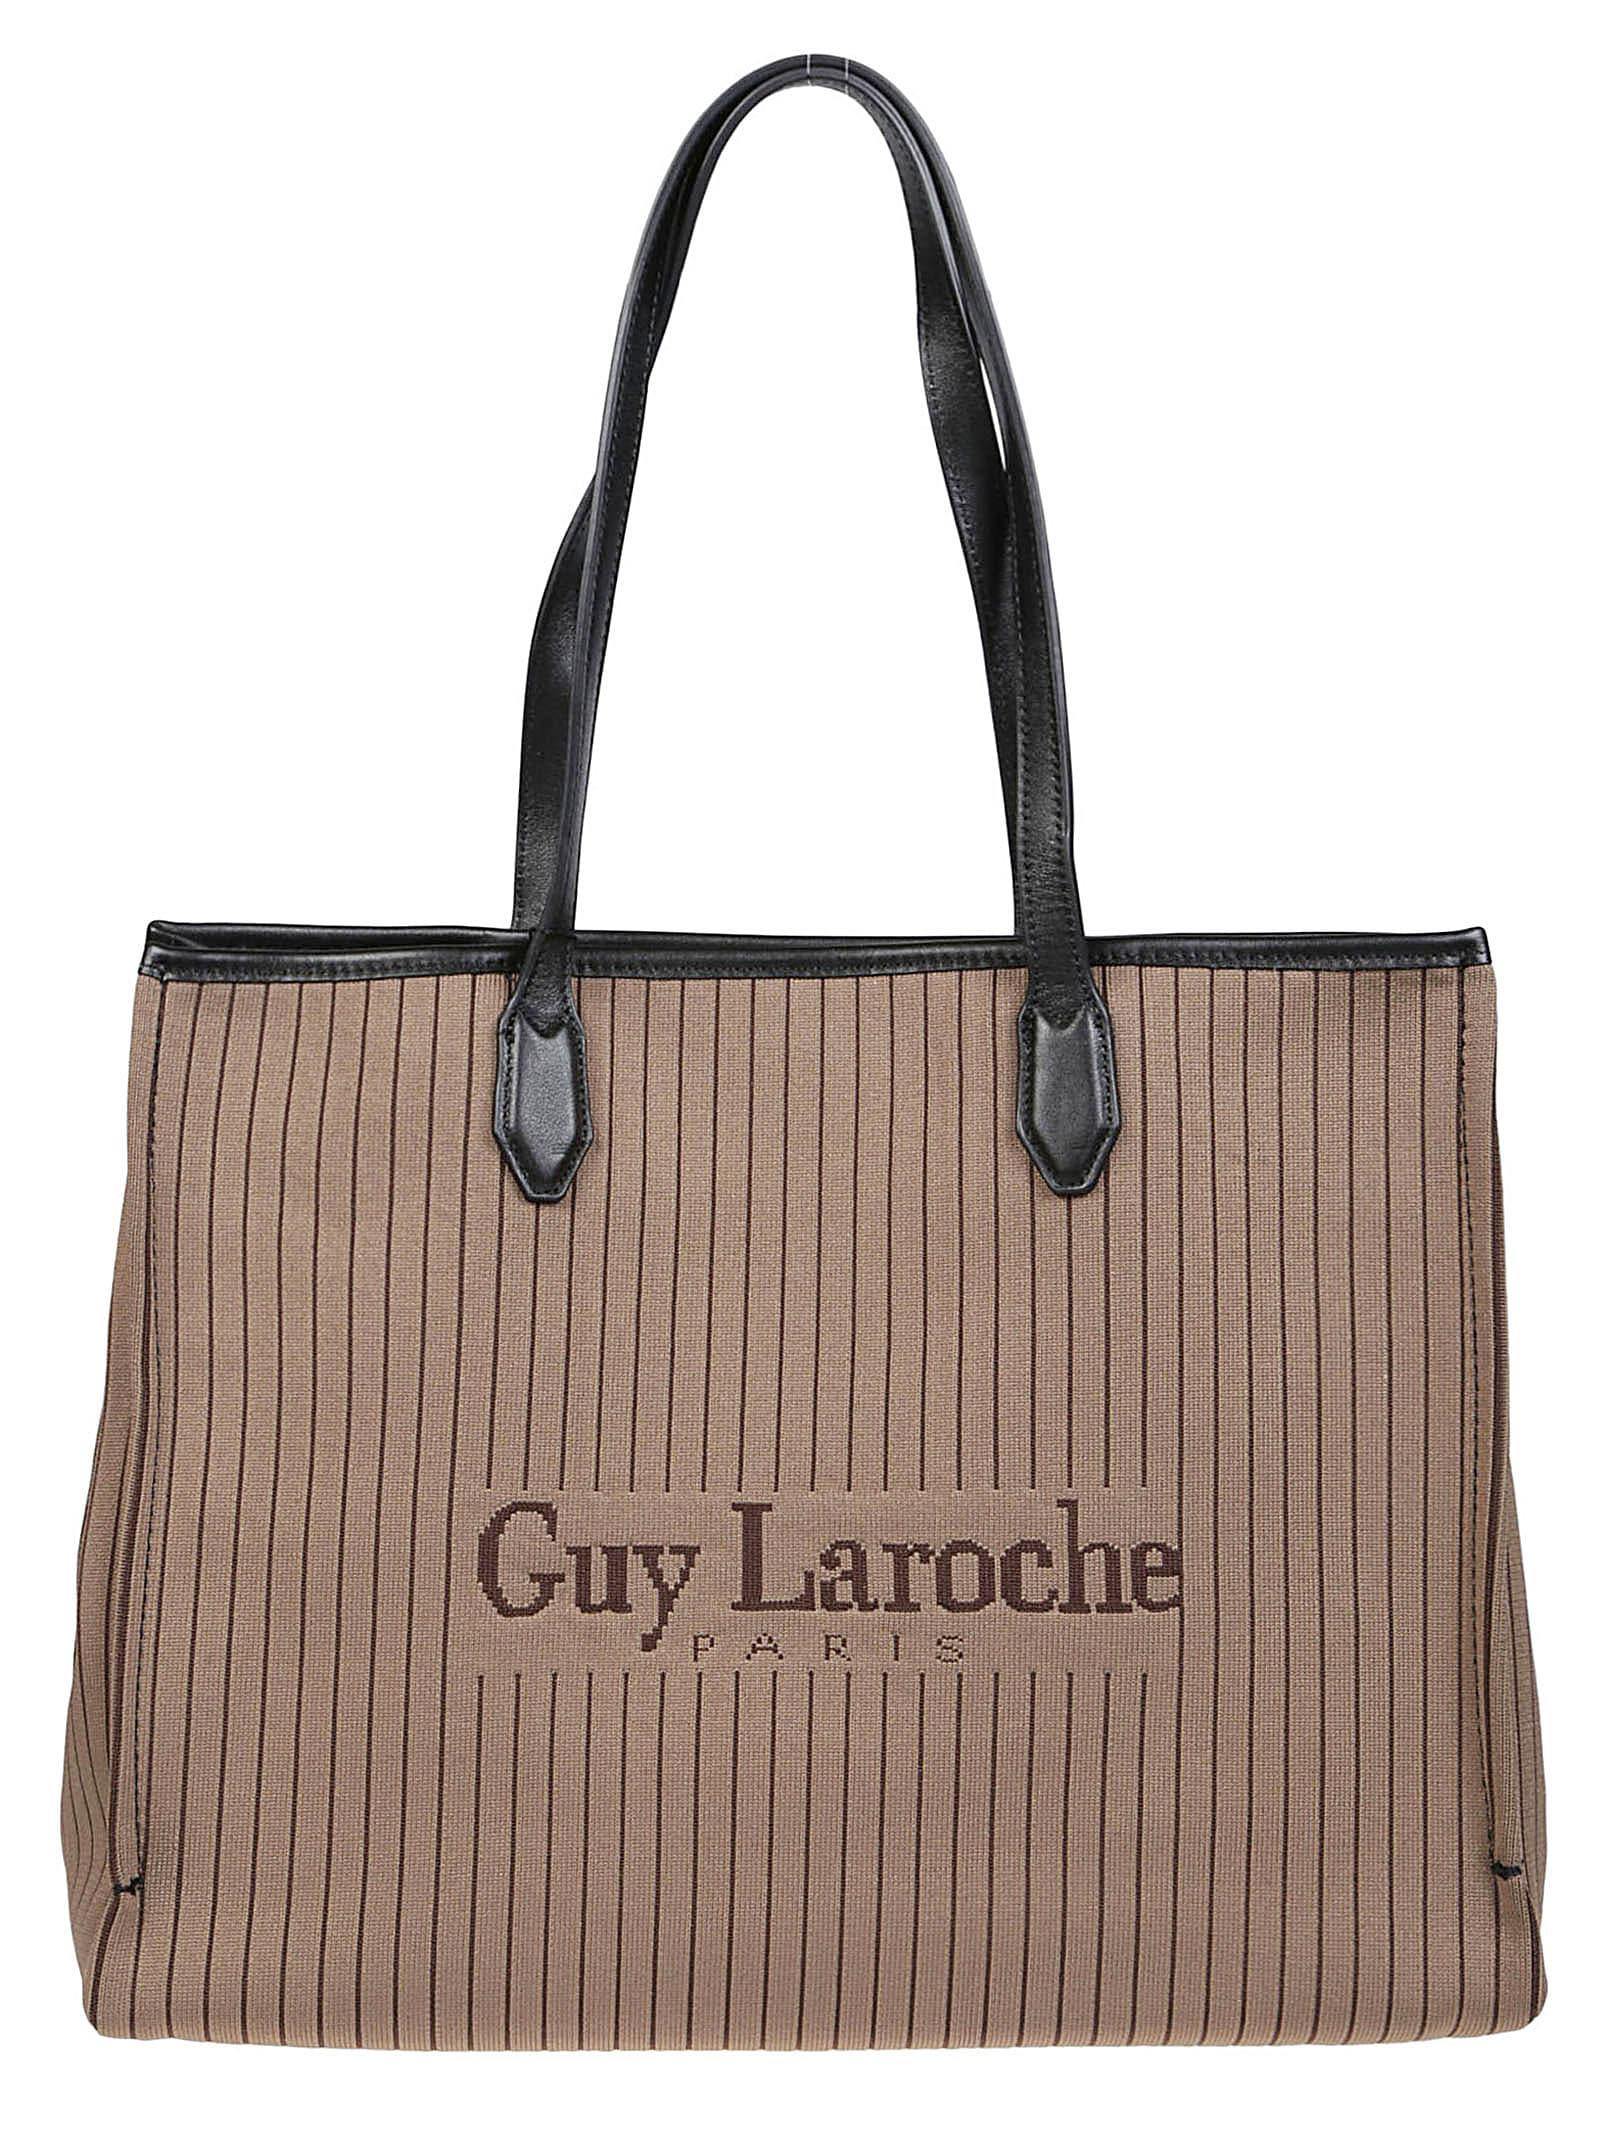 Guy Laroche, Bags, Vintage Guy Laroche Bag